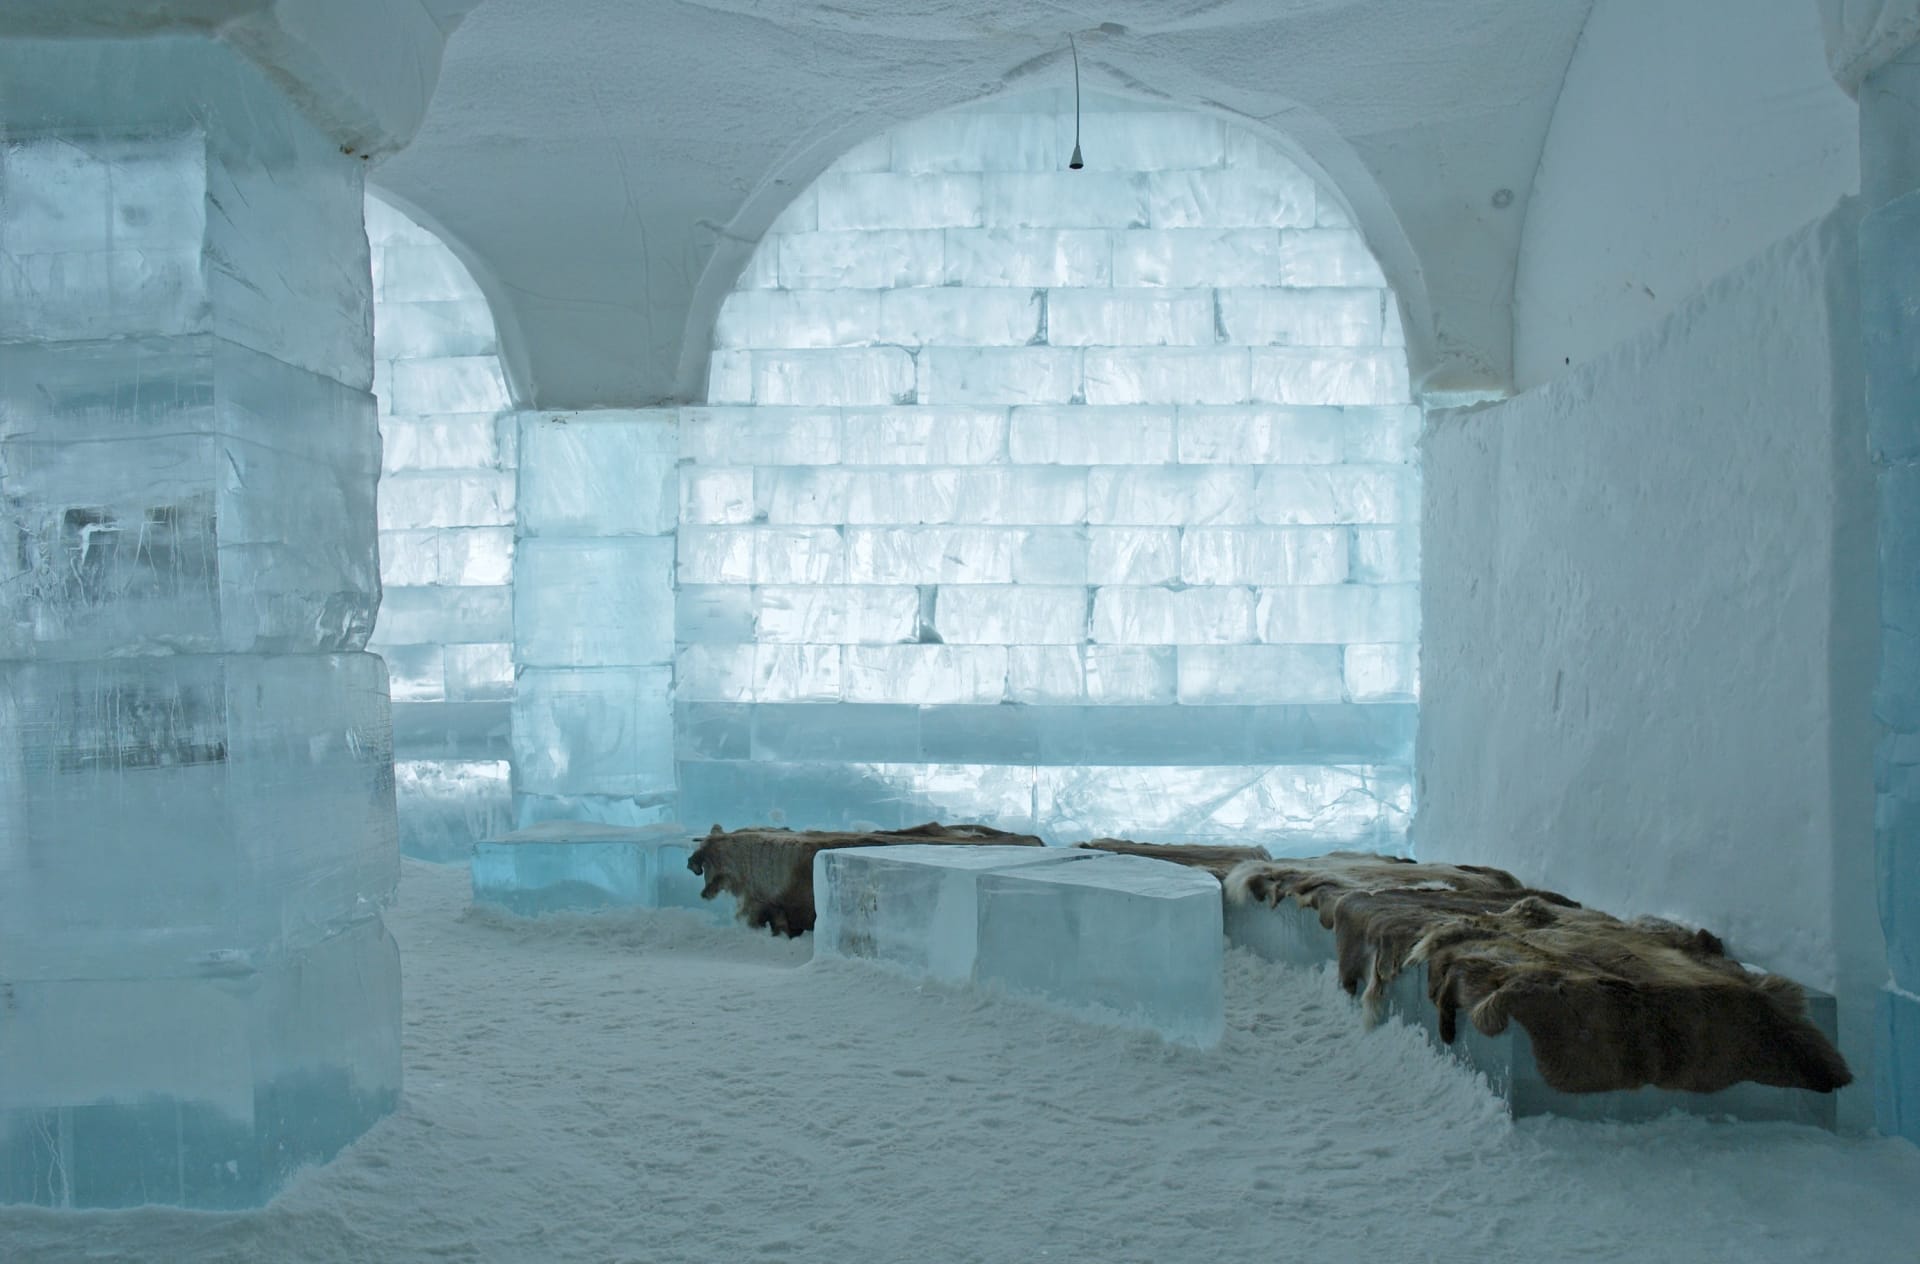 Hotely z ledu